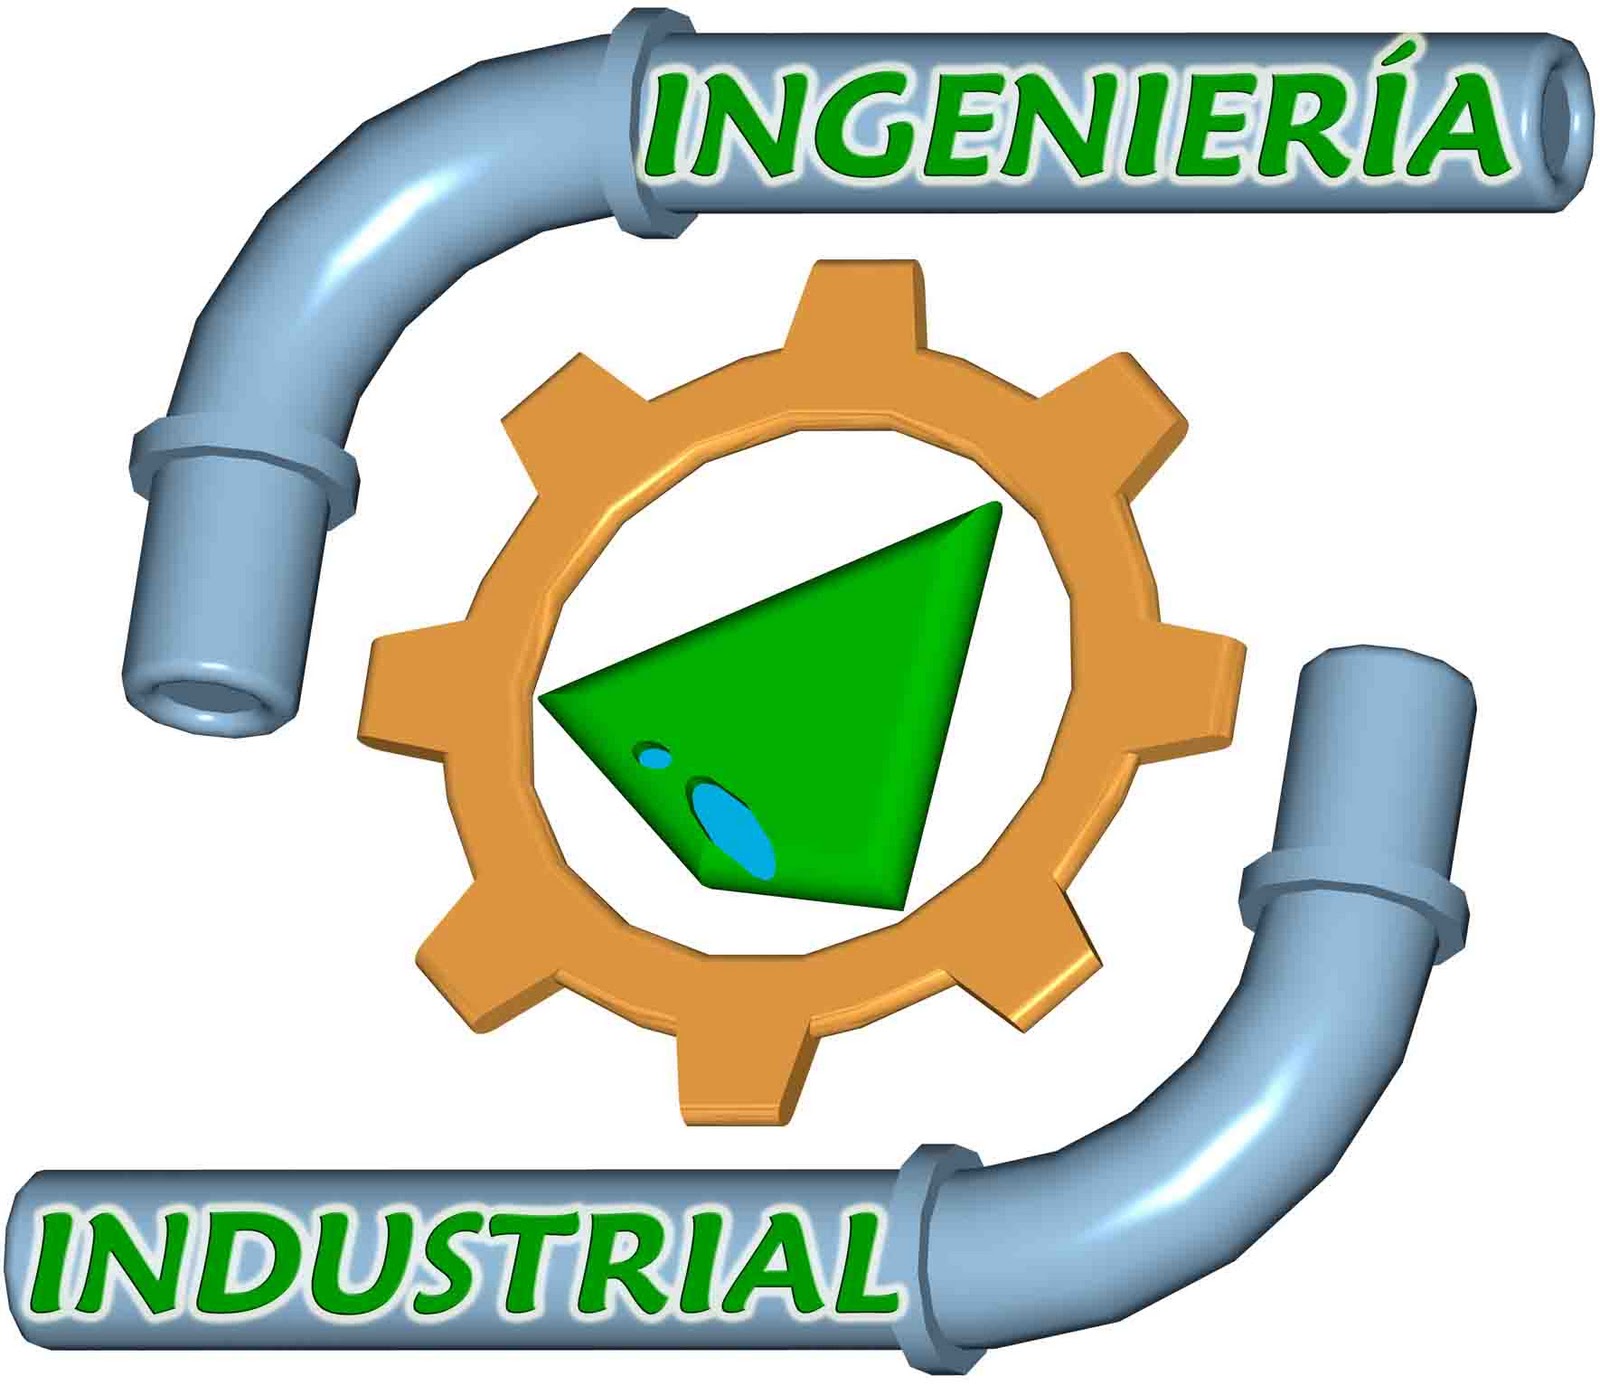 ingenieria industrial uis Logo photo - 1